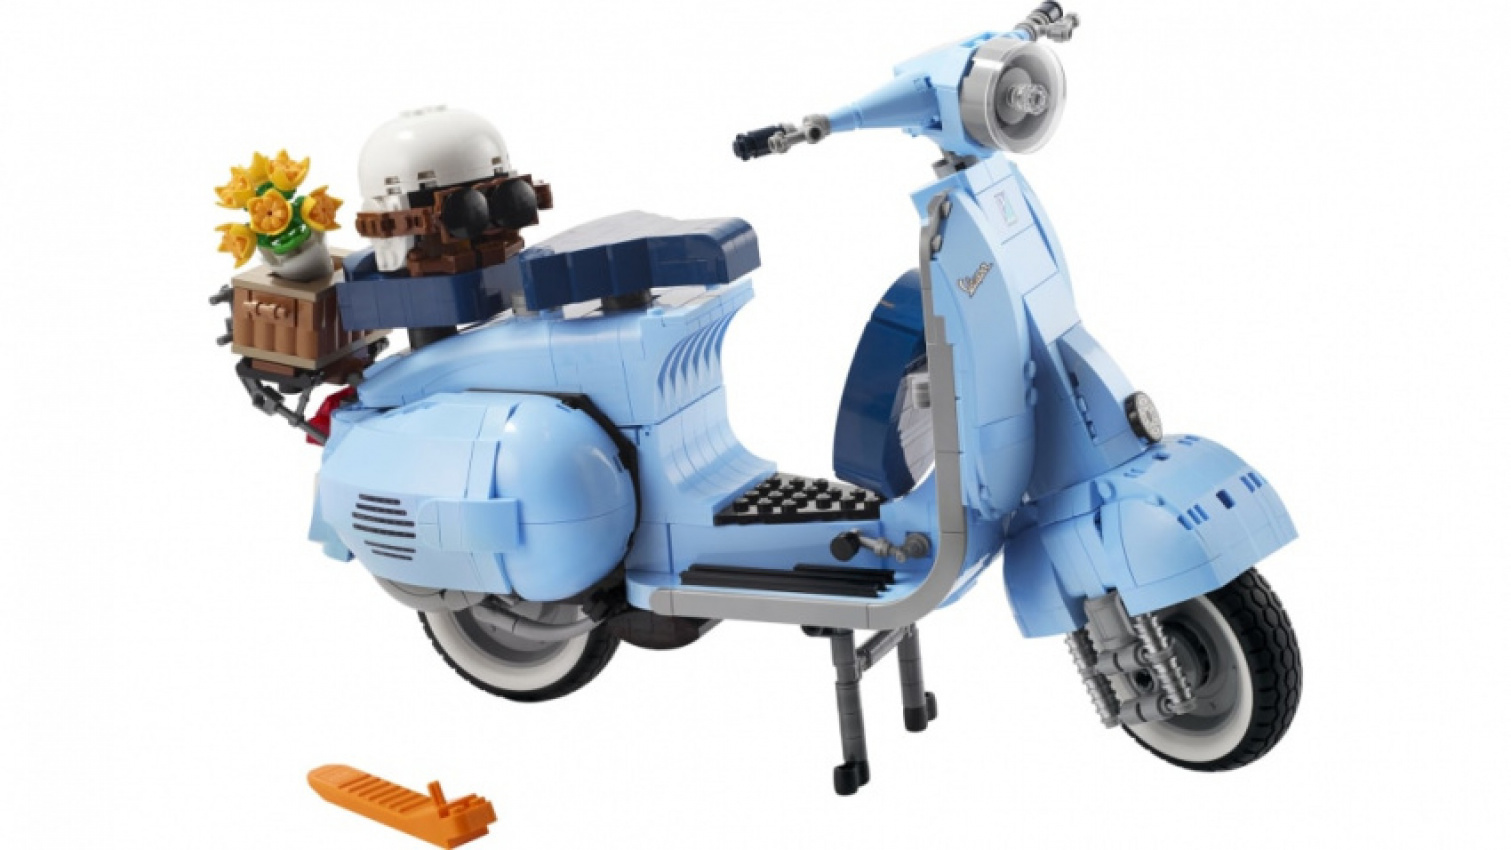 autos, cars, piaggio, toys/games, motorcycle, vespa, 1960s piaggio vespa 125 joins lego's catalog of two-wheelers